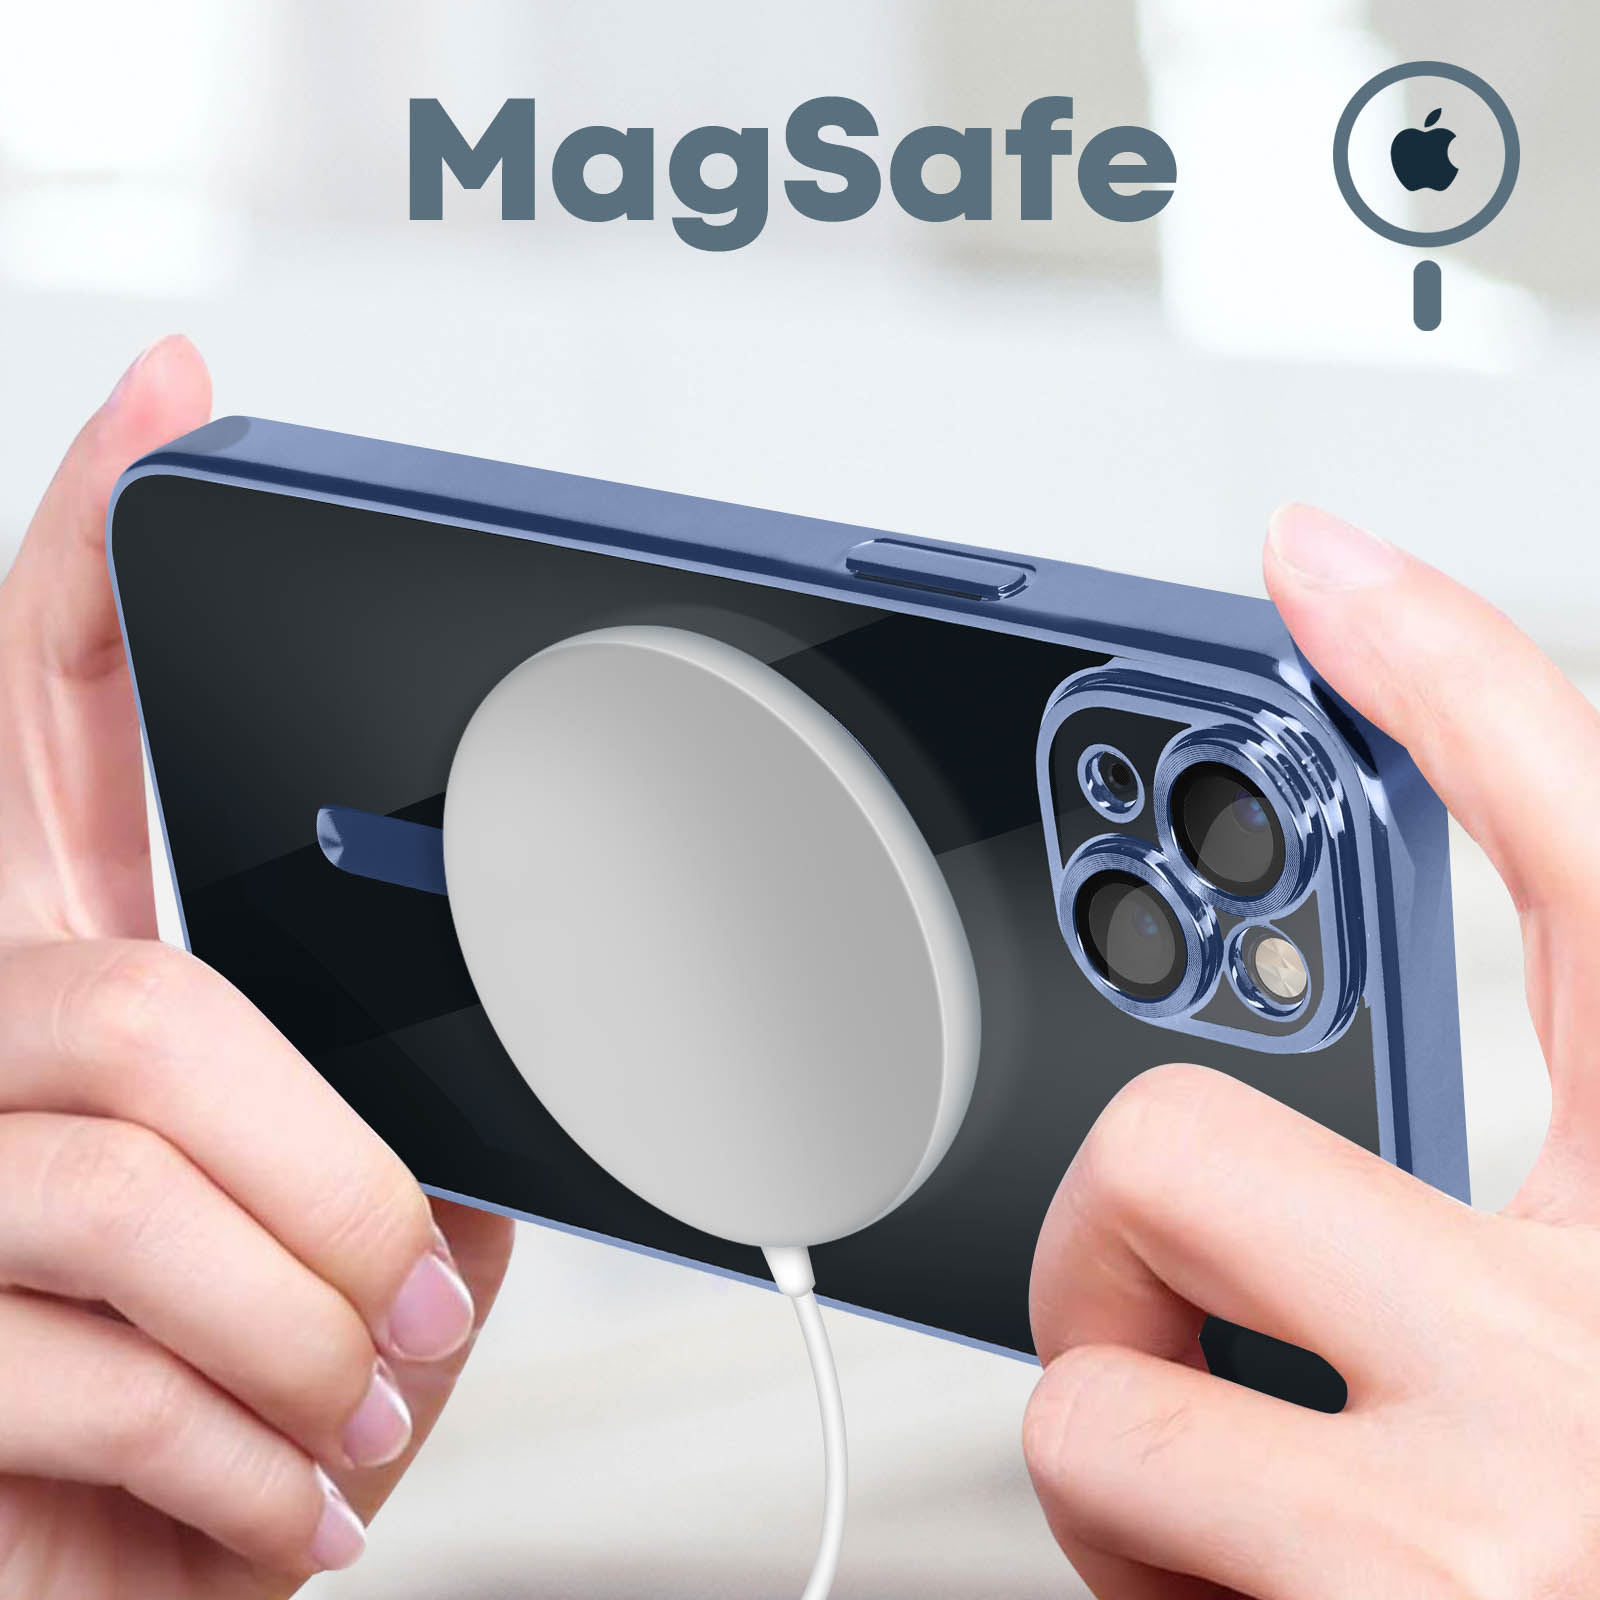 Funda MagSafe iPhone 13 Silicona Cromada Azul Claro - Spain